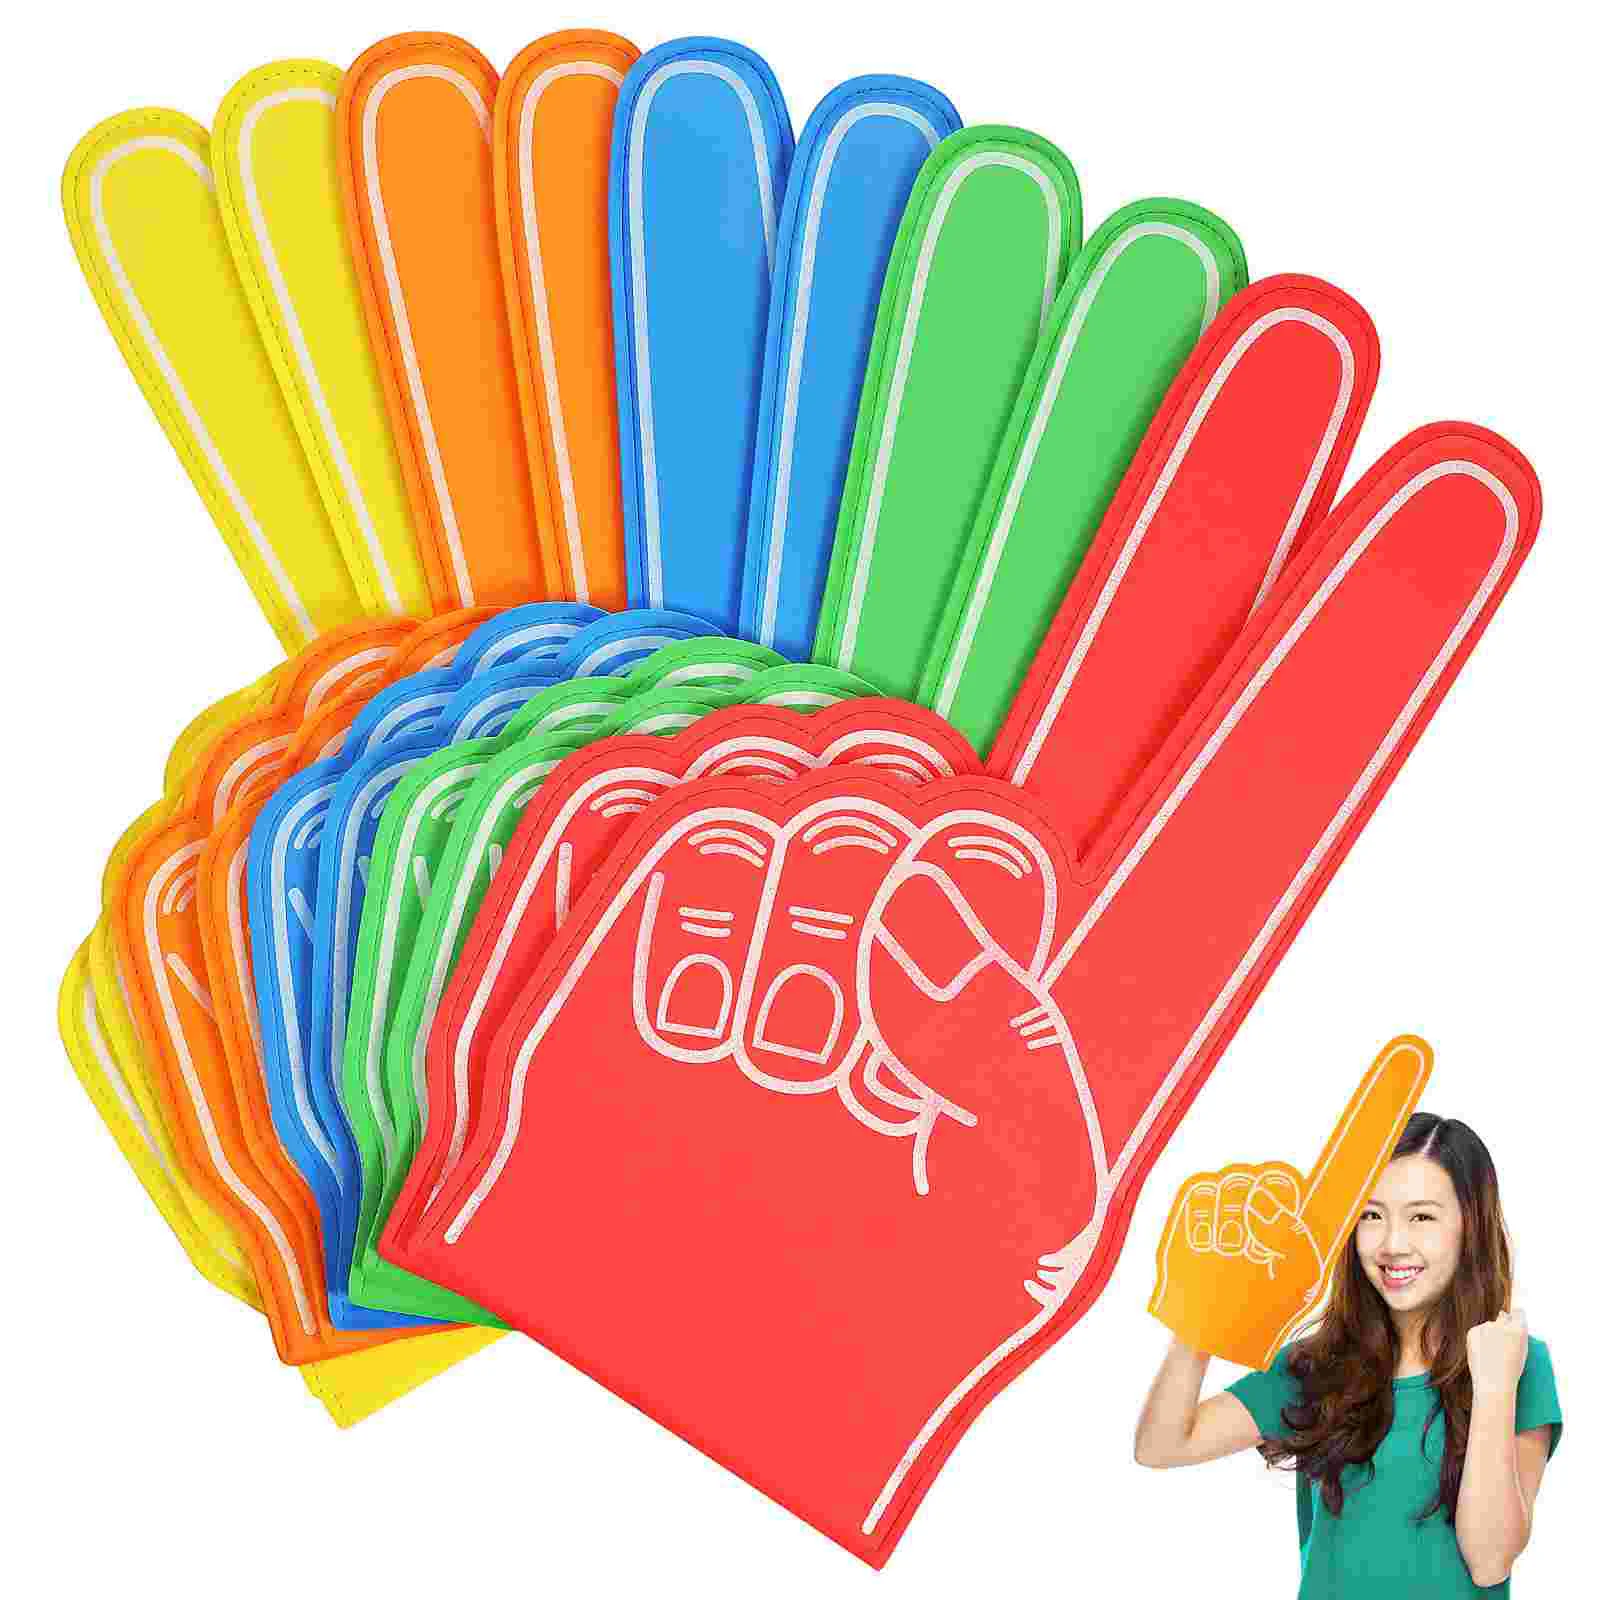 

10 Pcs Cheering Clapper Foam Fingers Sports Party Foams Giant Large Eva Bulk Cheerleading Props Colored